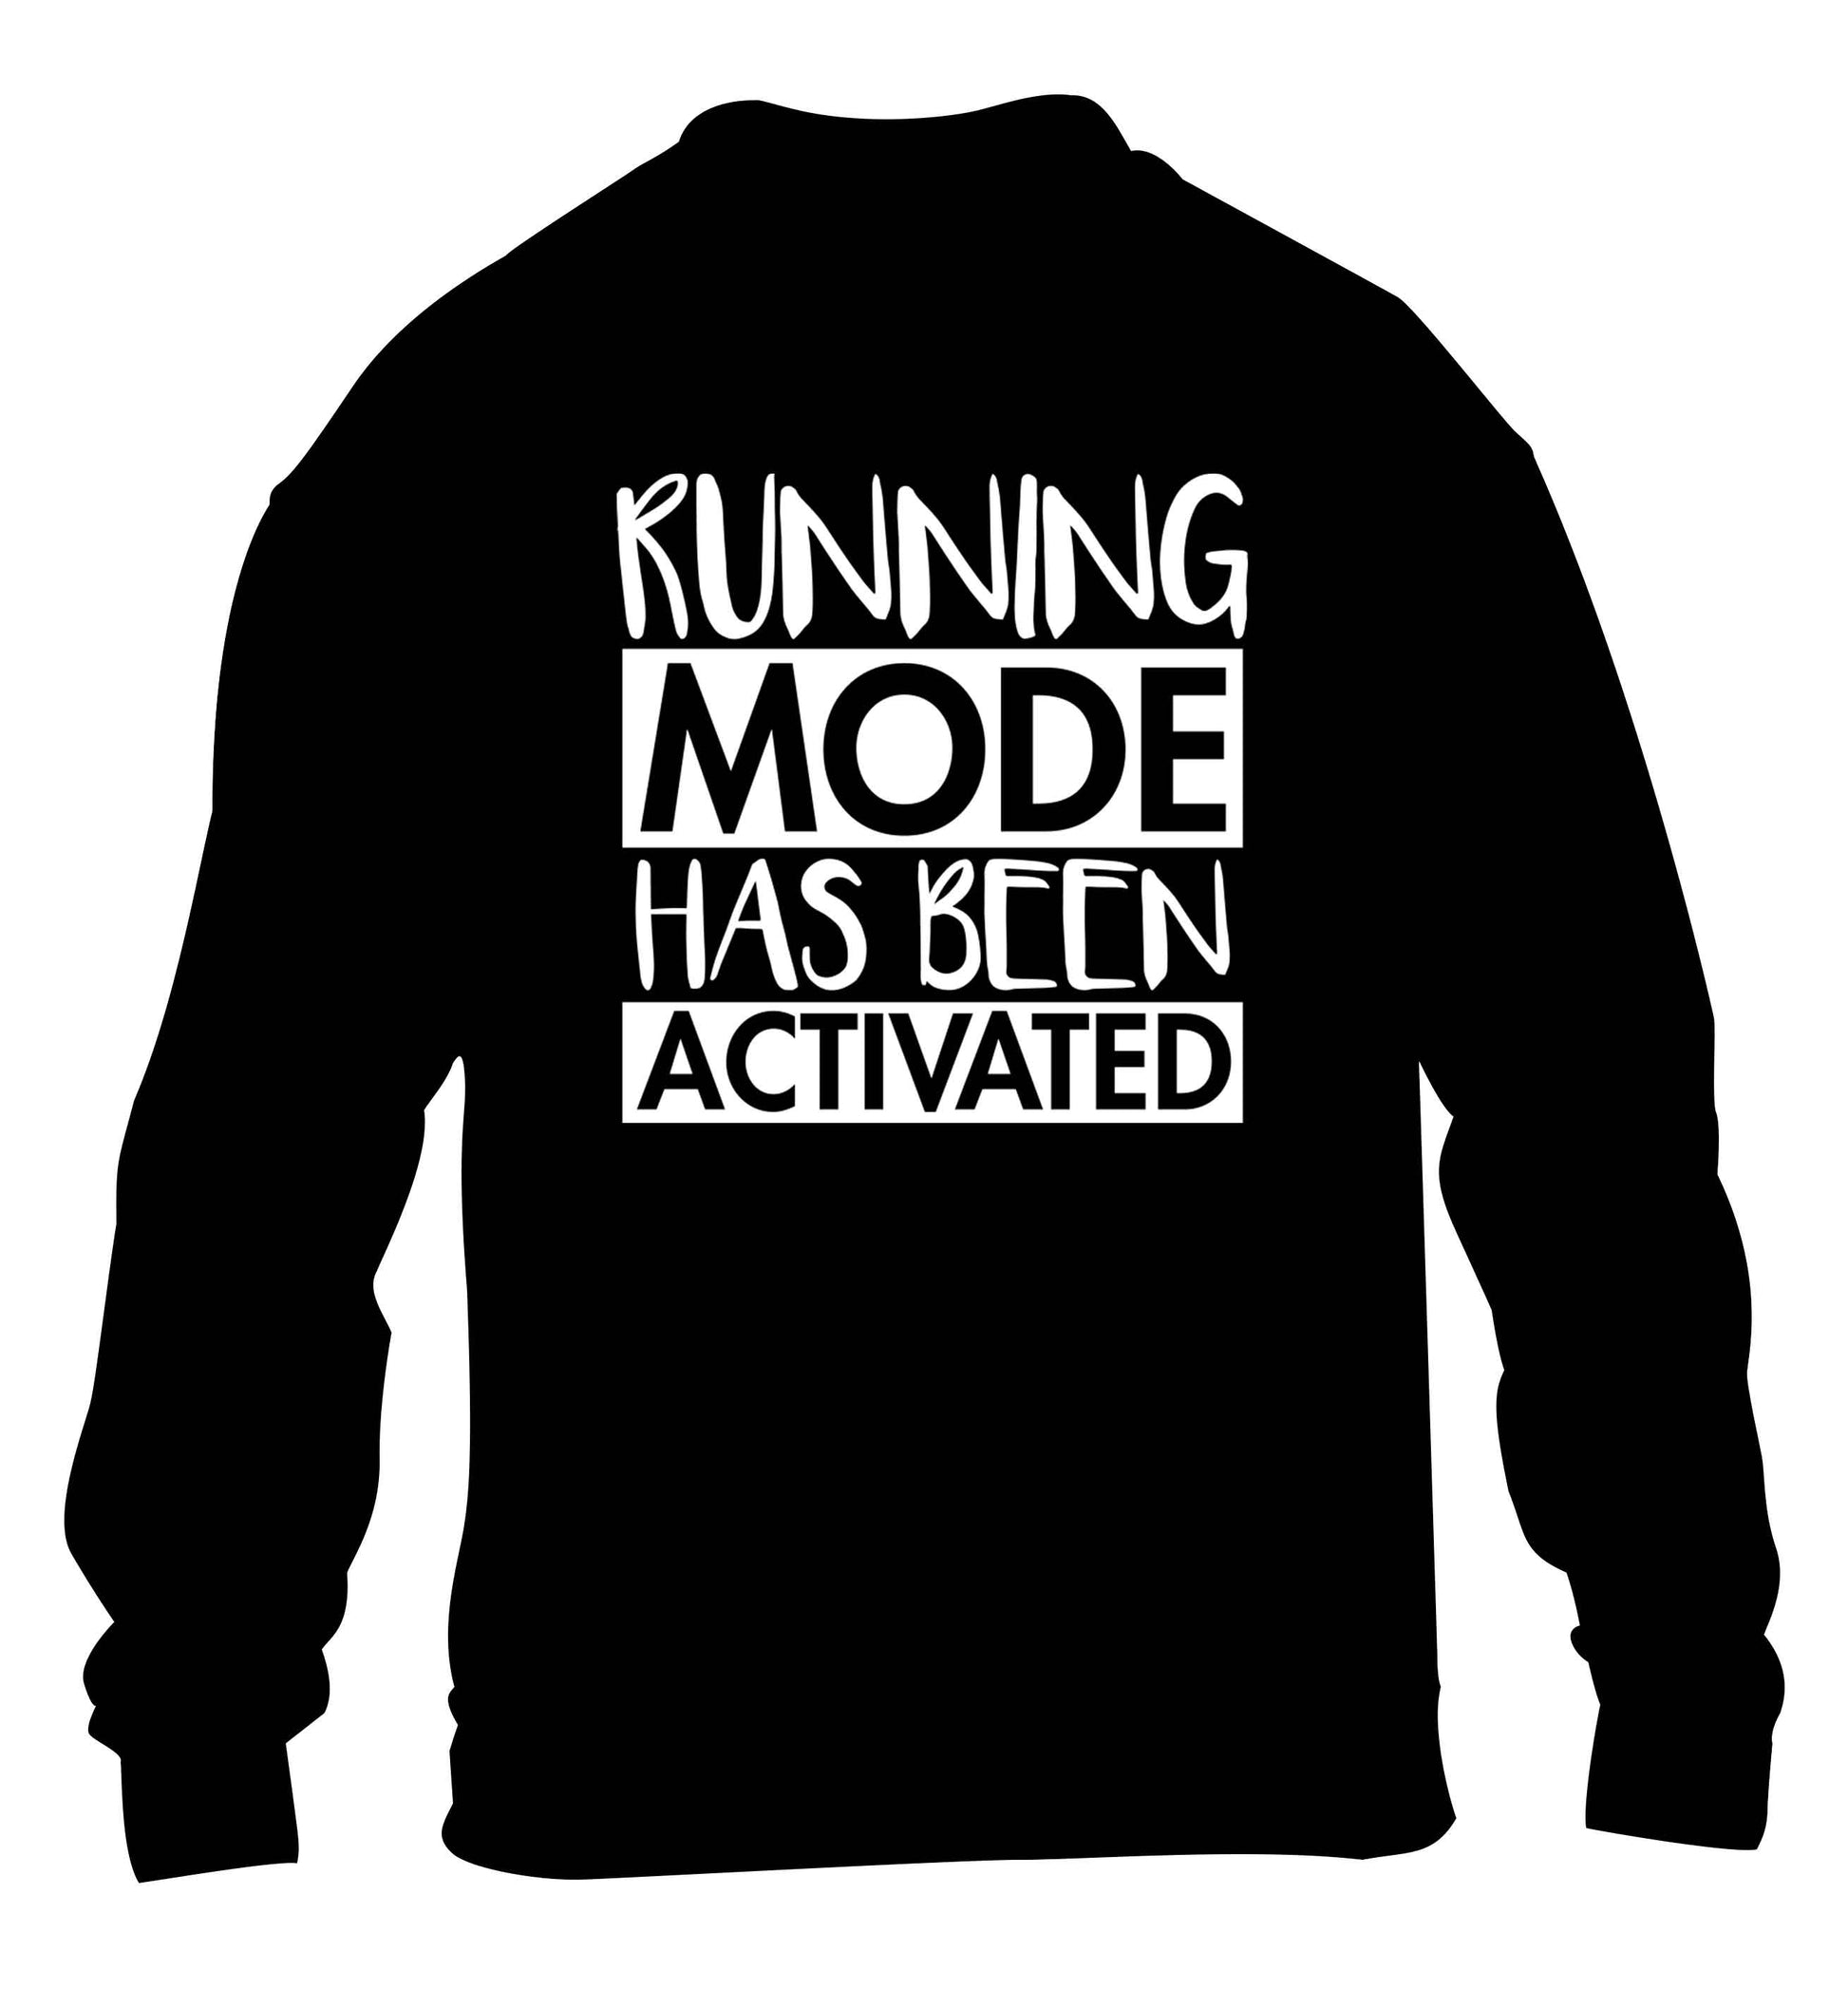 Running mode has been activated children's black sweater 12-13 Years